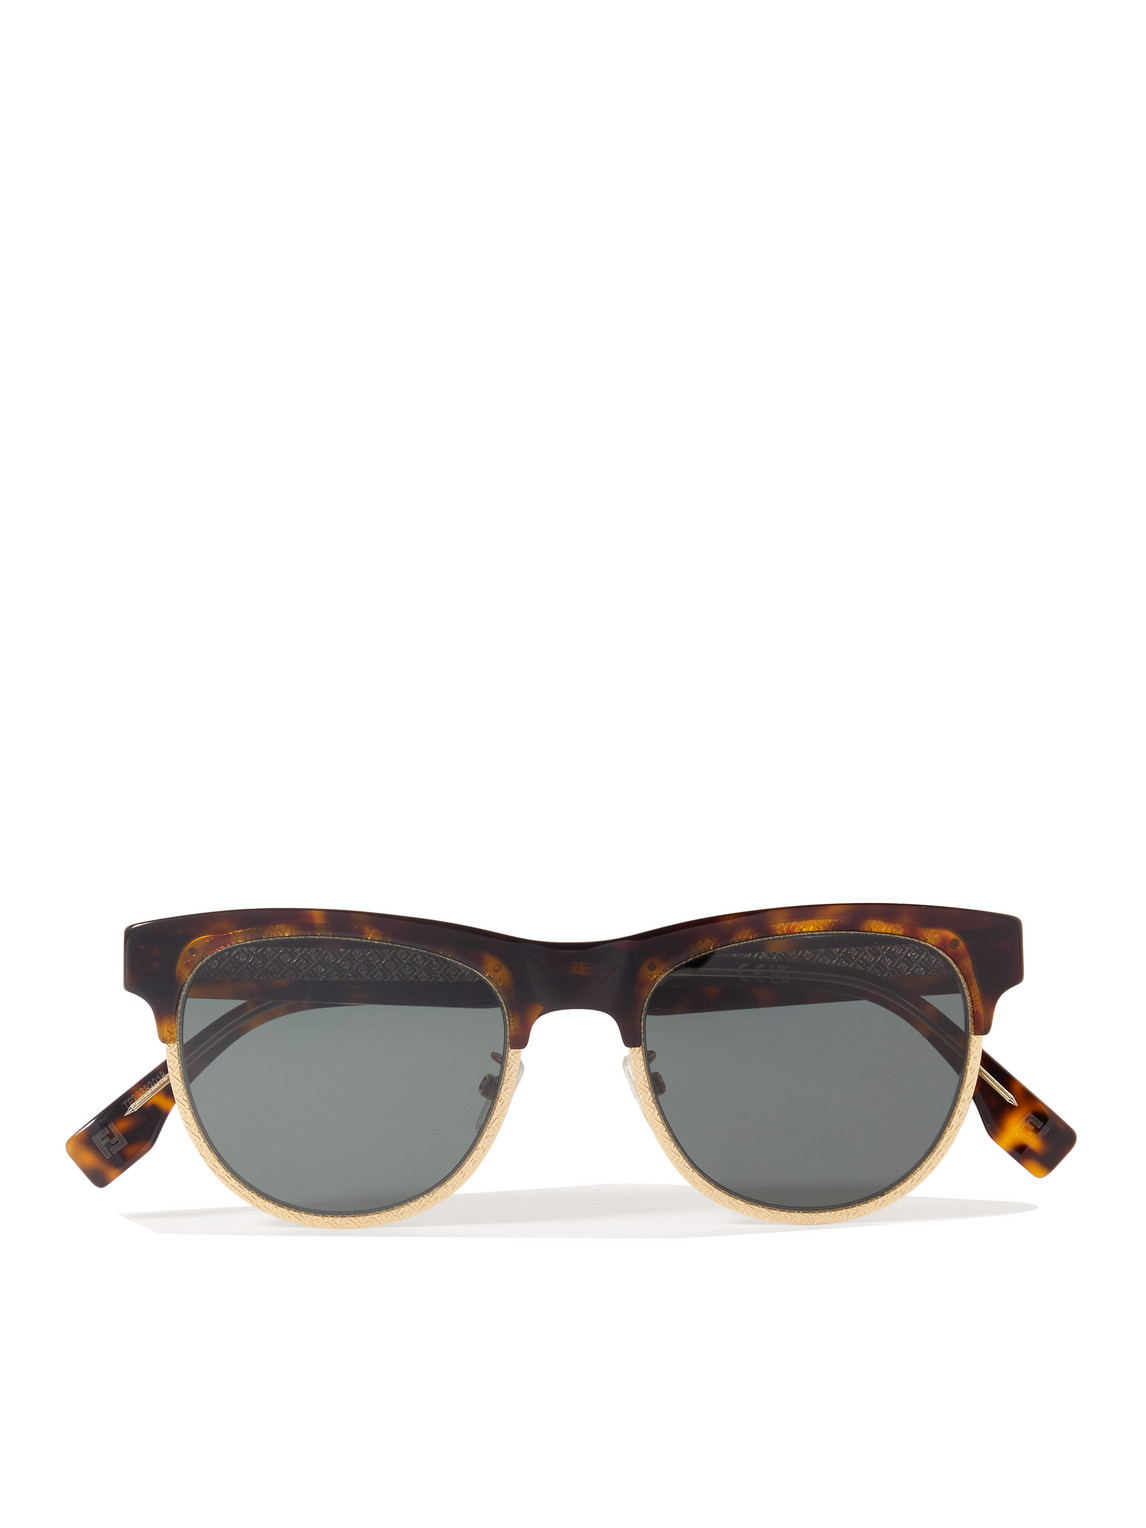 Fendi D-frame Tortoiseshell Acetate And Gold-tone Sunglasses